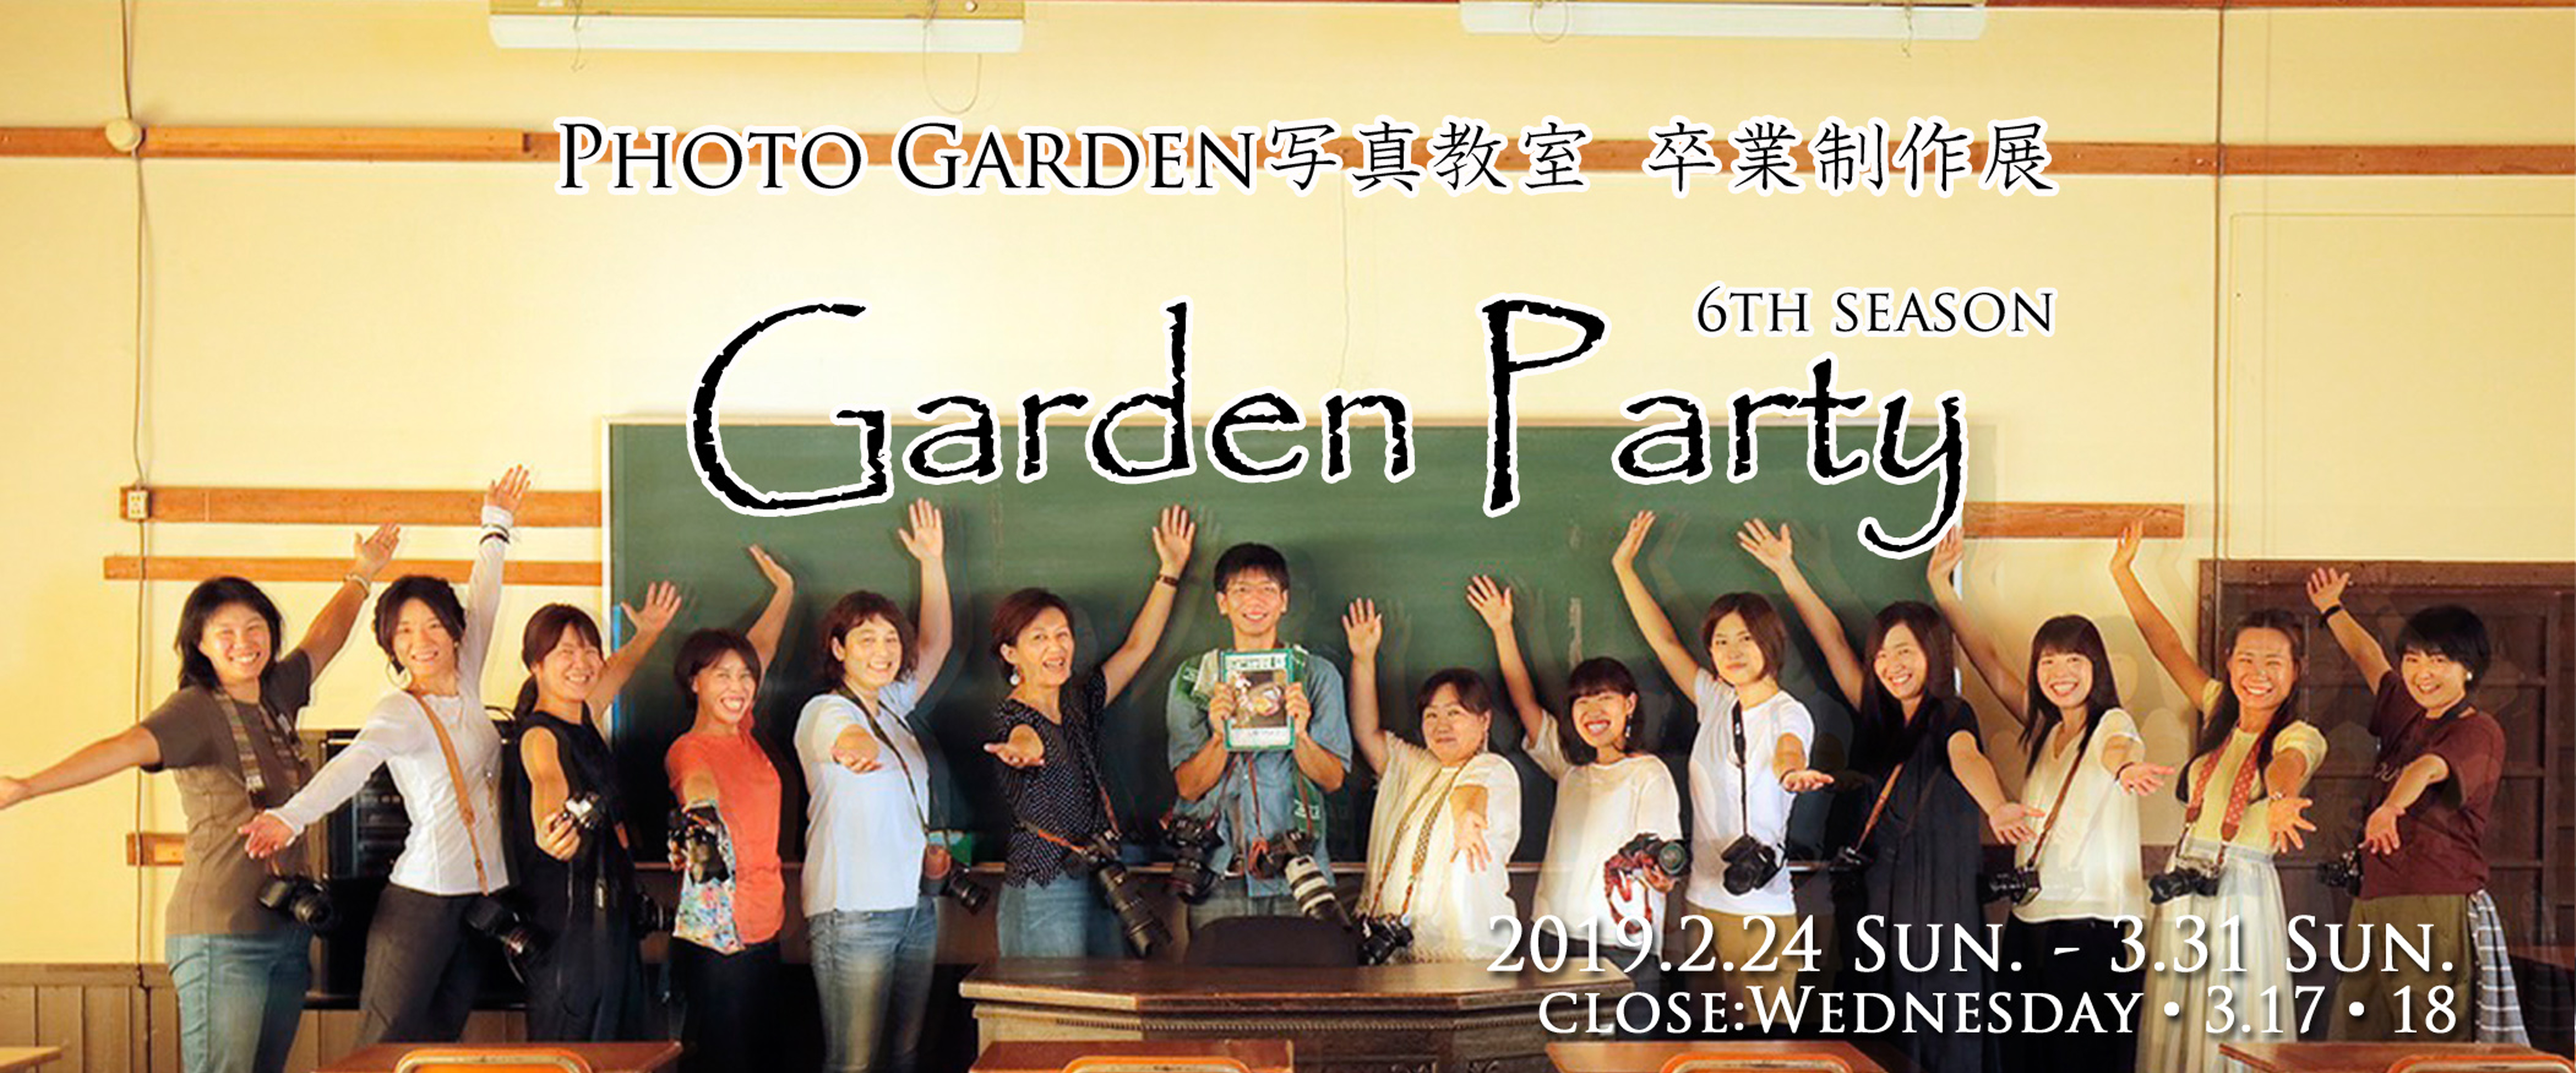 PHOTO GARDEN 定期写真教室 卒業制作展『Garden Party 6th season』